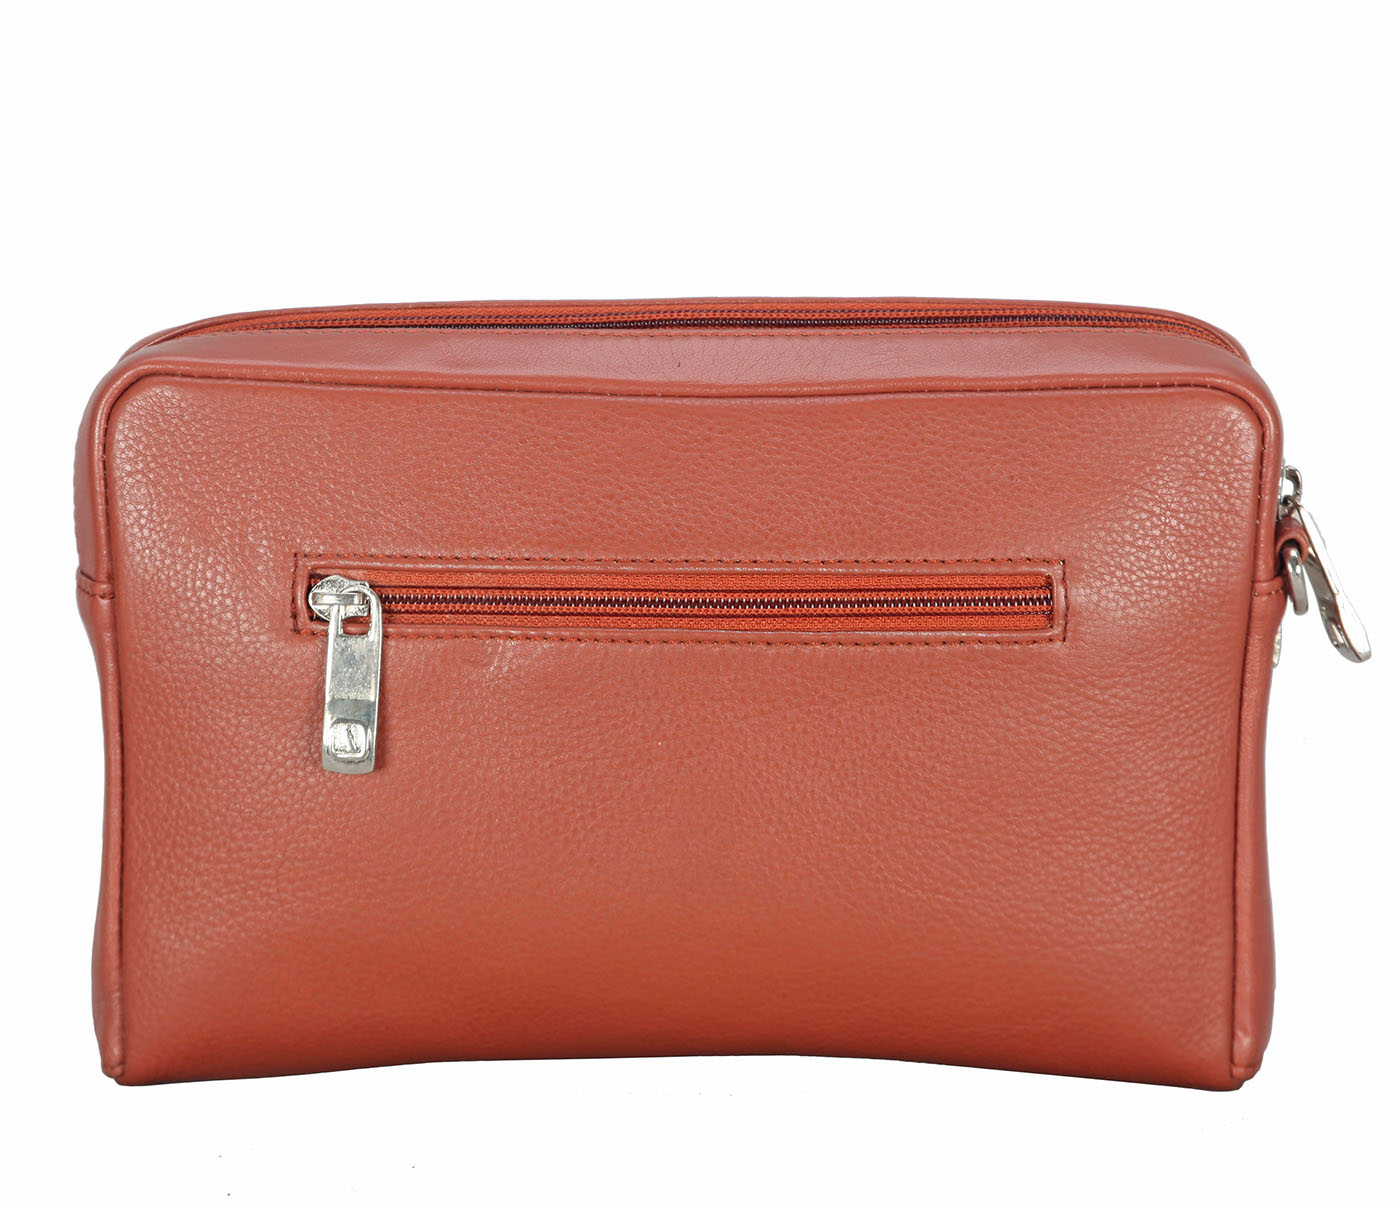 P20-Fernando-Men's bag cum travel pouch in Genuine Leather - Tan